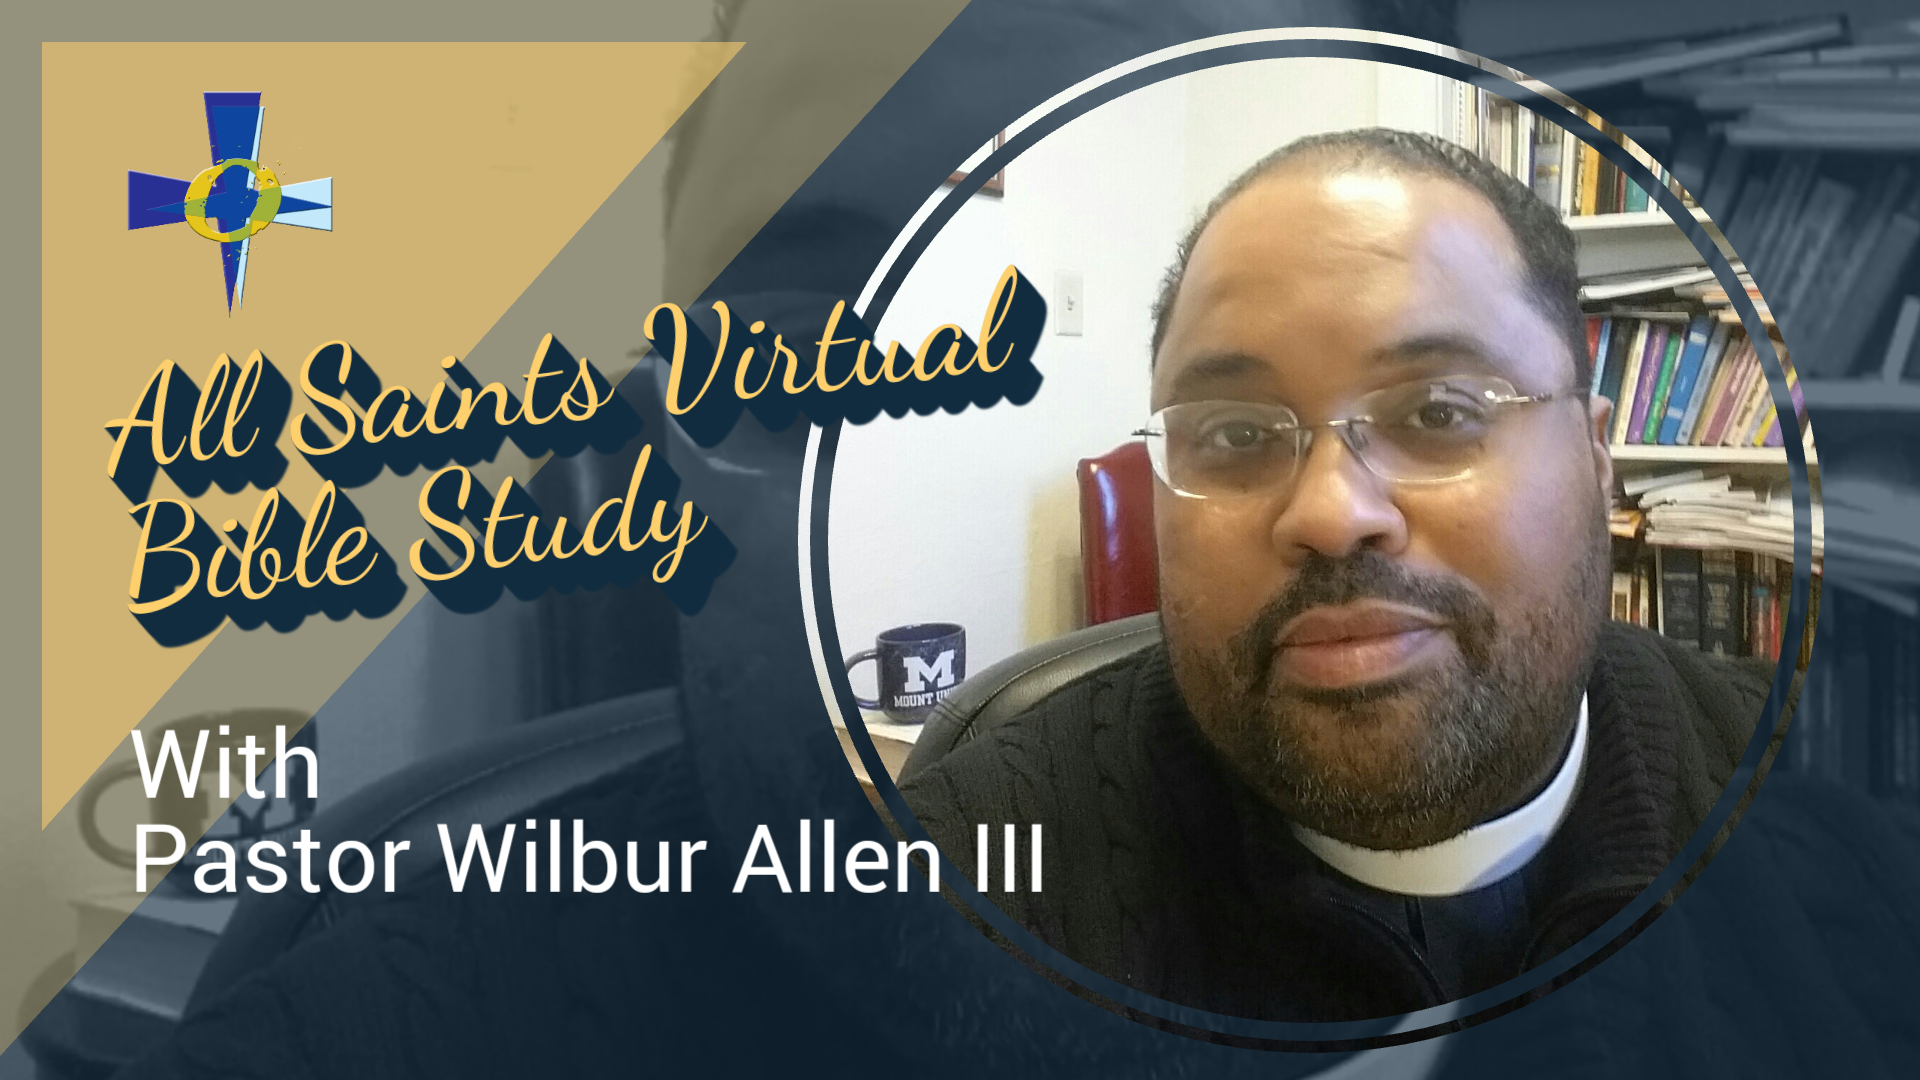 All Saints Virtual Bible Study - The Believer's Forgiveness